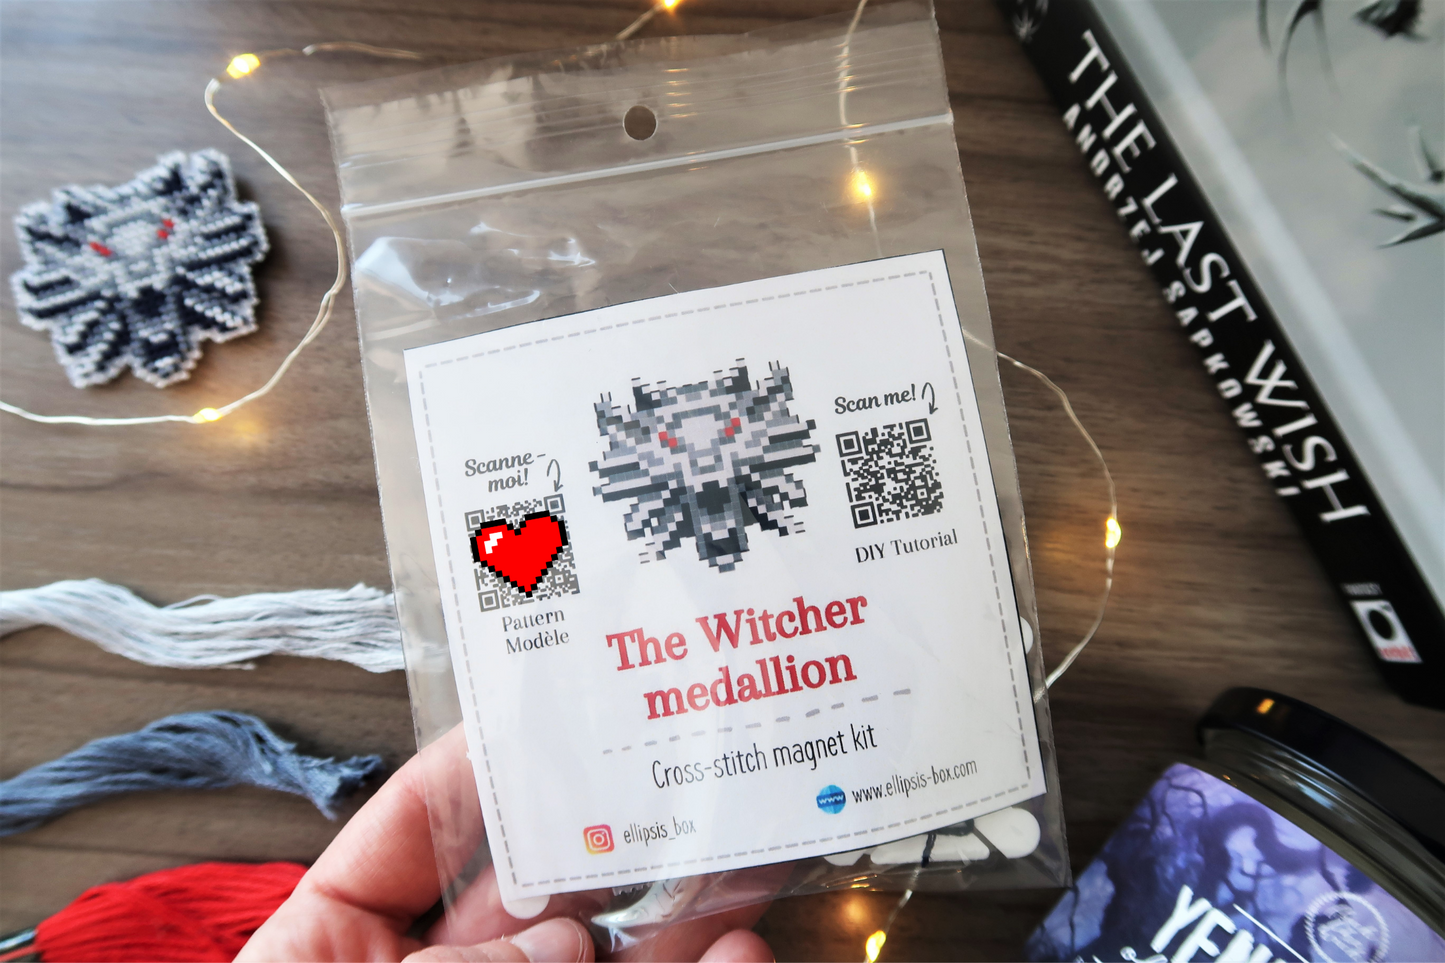 The Witcher 3 medallion - Cross stitch magnet kit